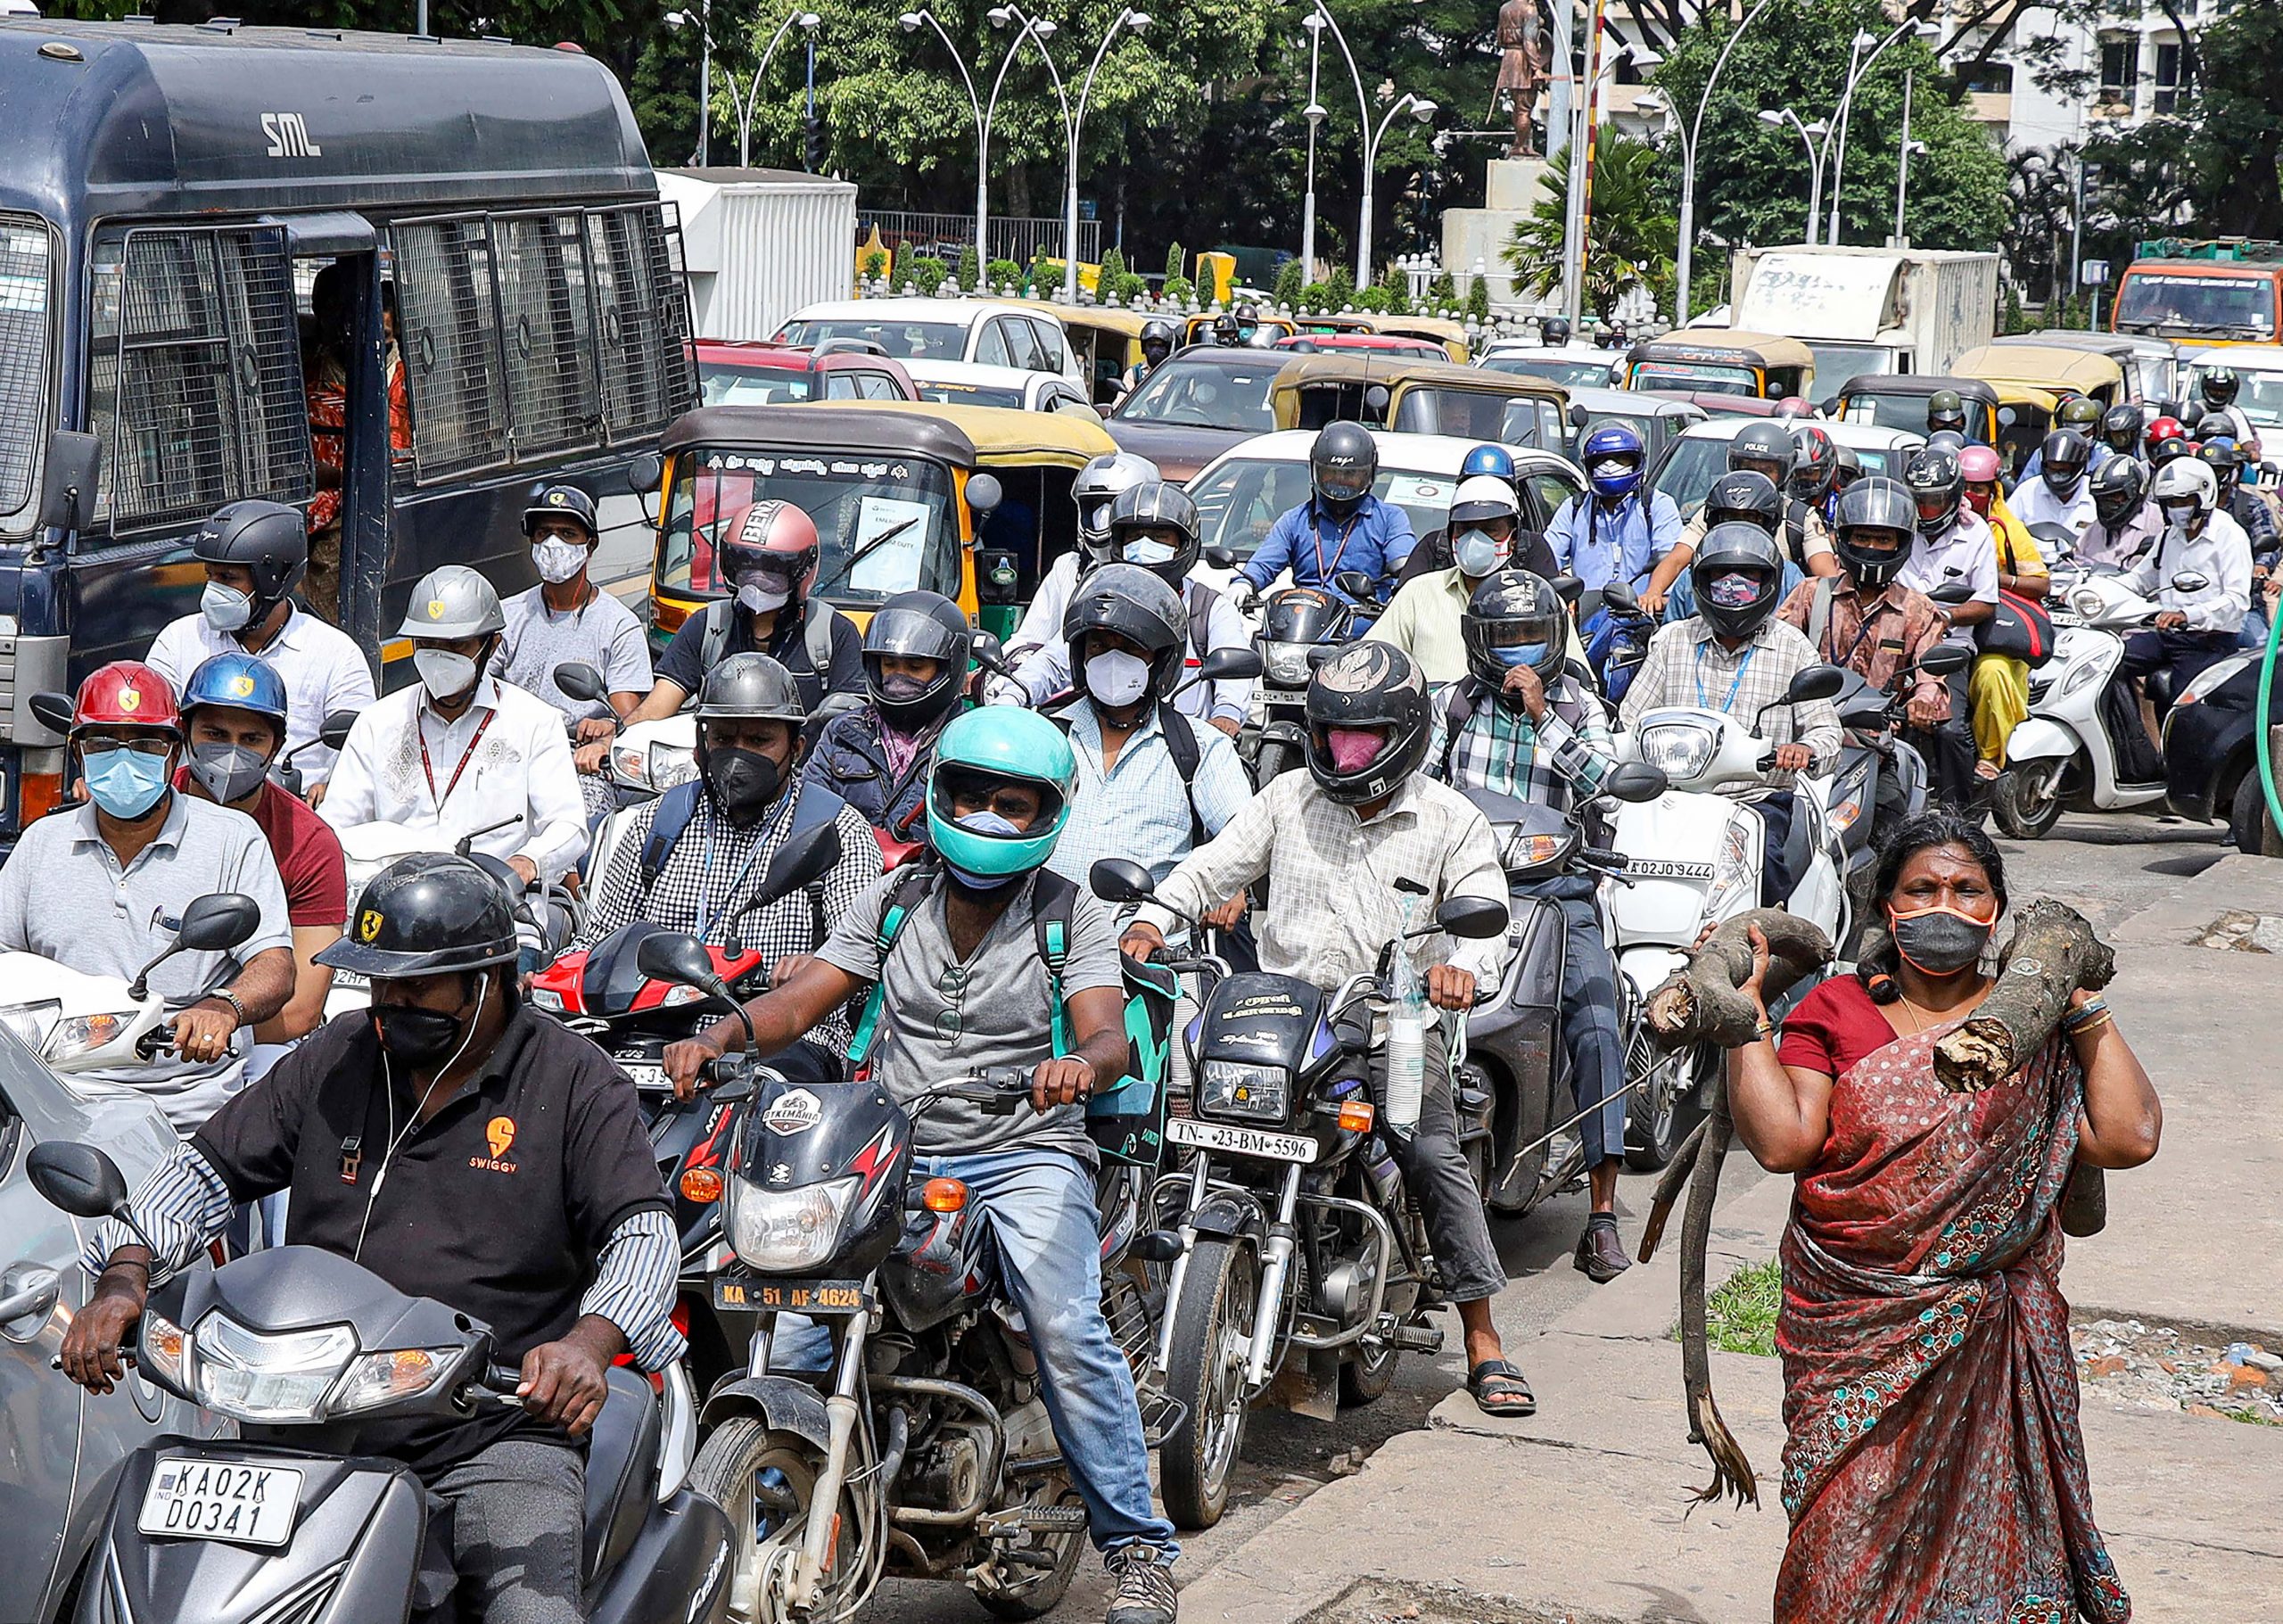 70/60kmph, revised maximum speed limit for vehicles in Delhi